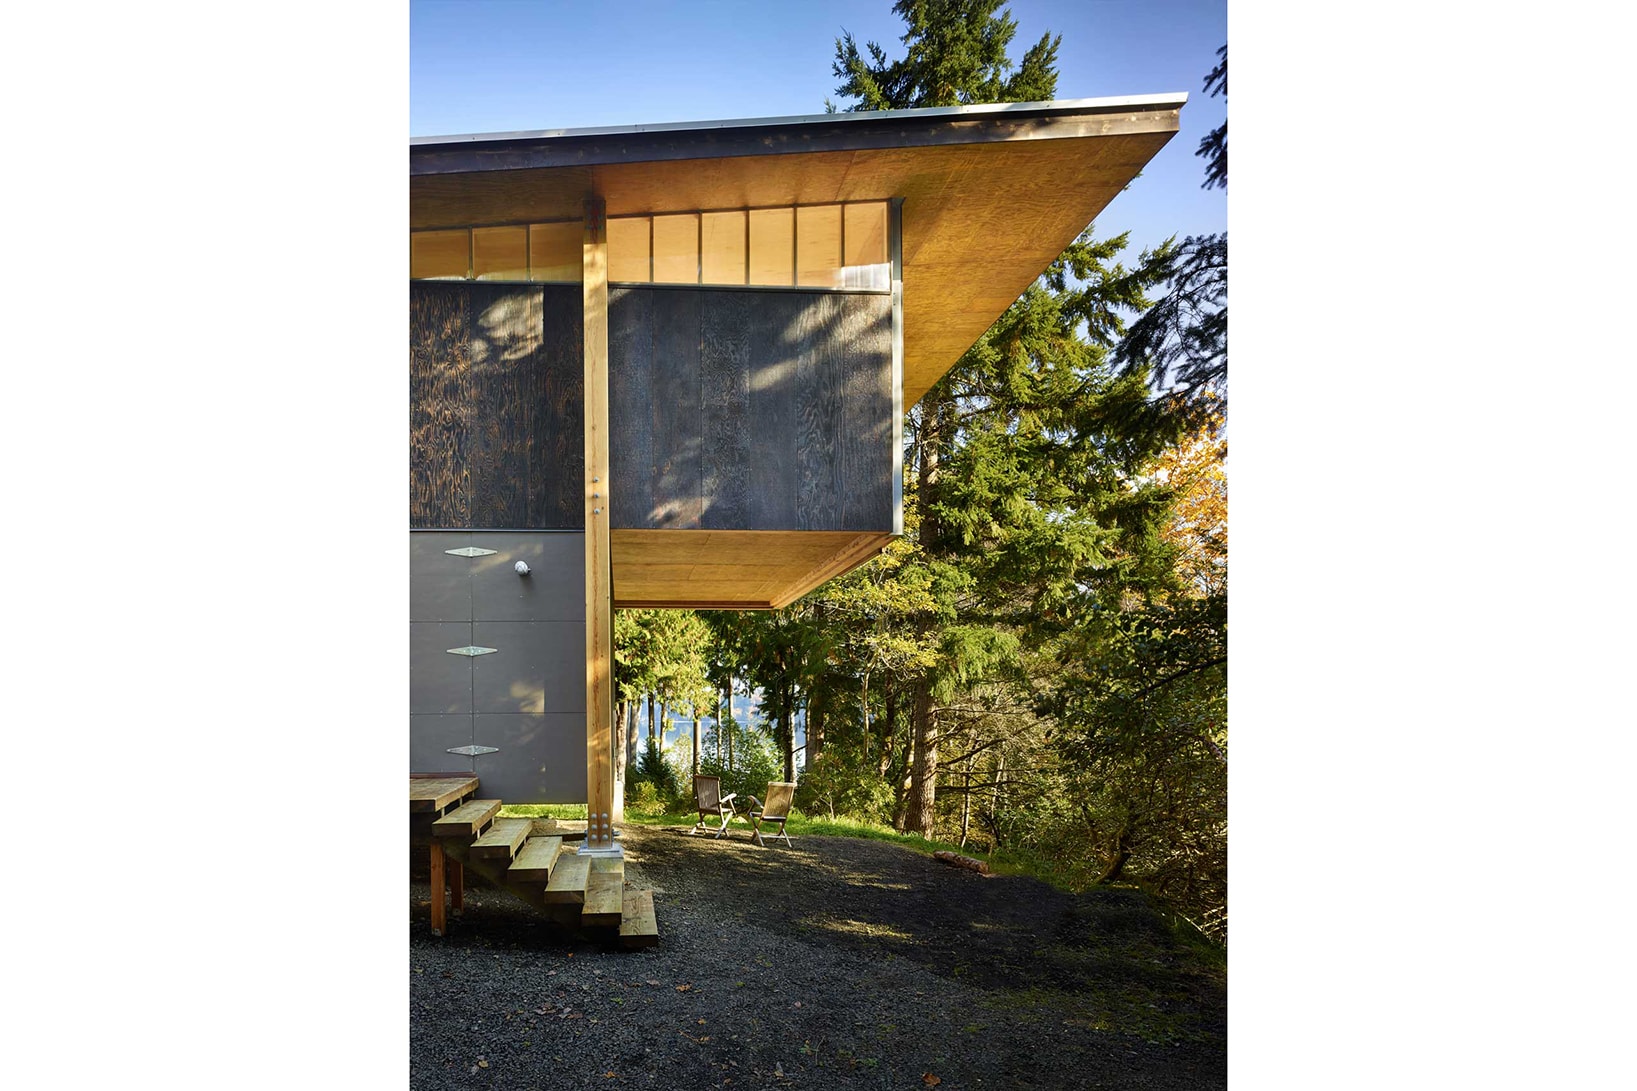 Artist's Studio Woods Forest Eerkes Architects Washington State Kitchen Living Area Sleeping Loft Steel Staircase Houses Homes